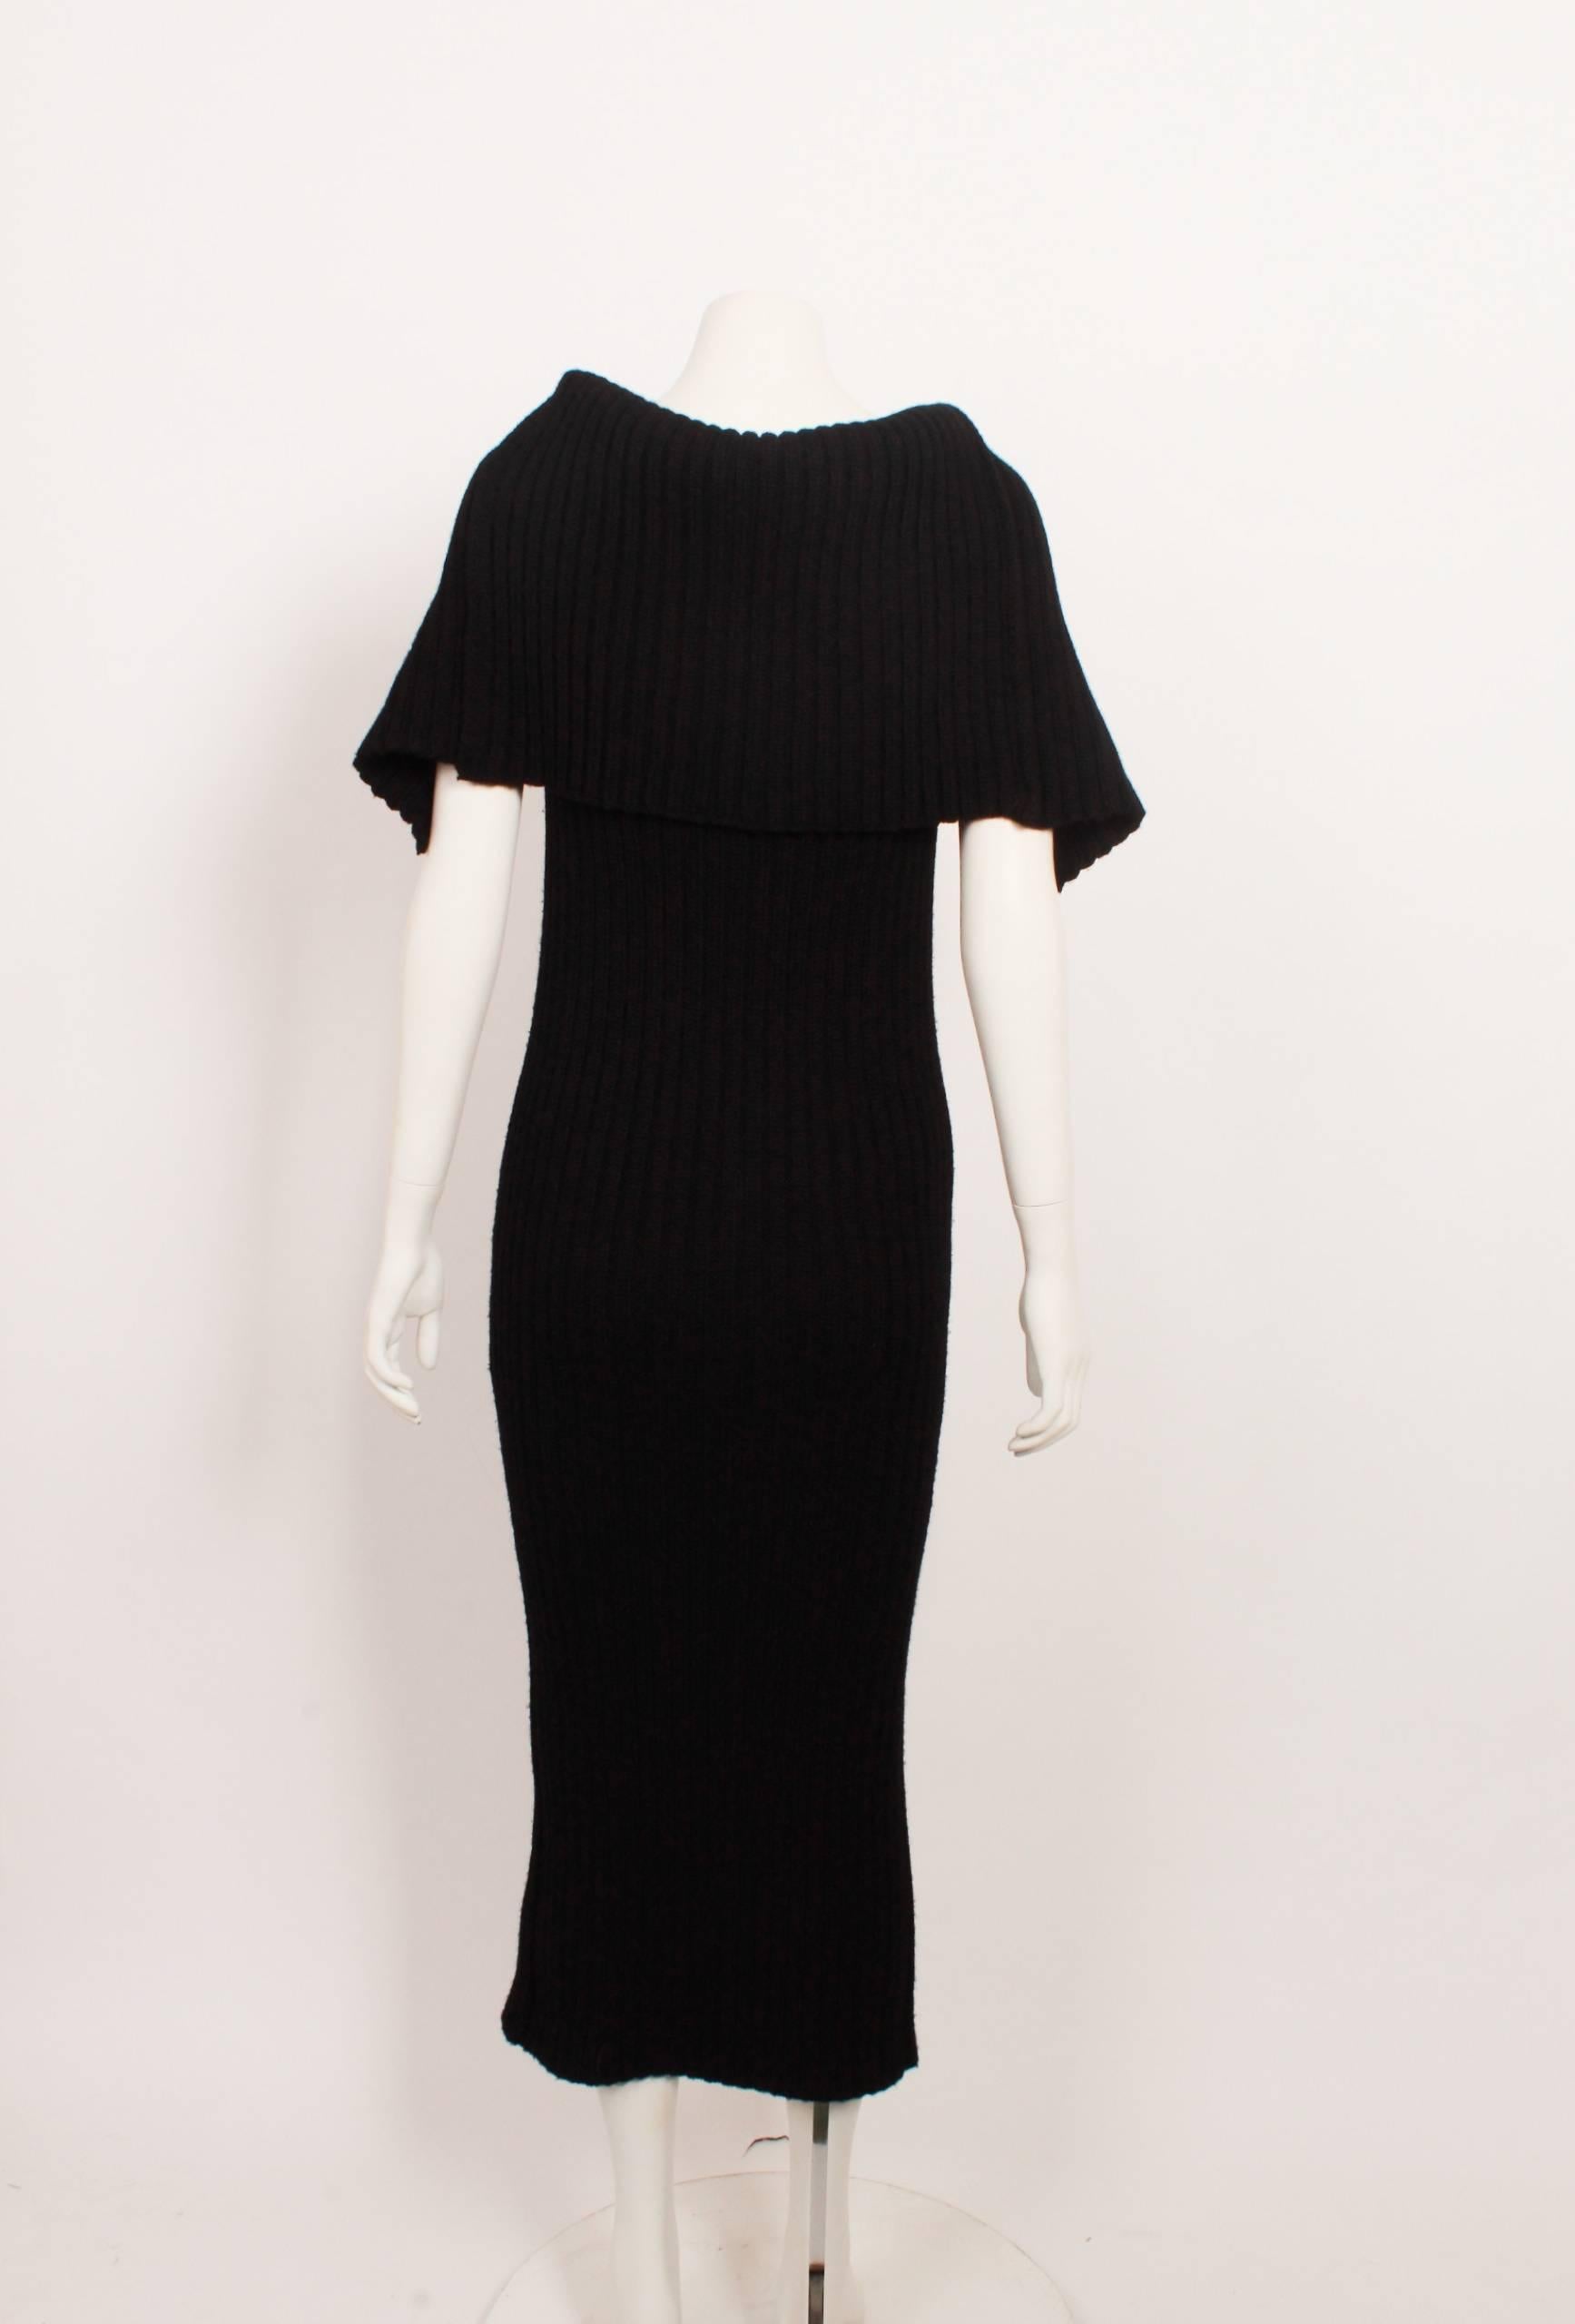 Maison Margiela Knit Zipper Dress For Sale 1